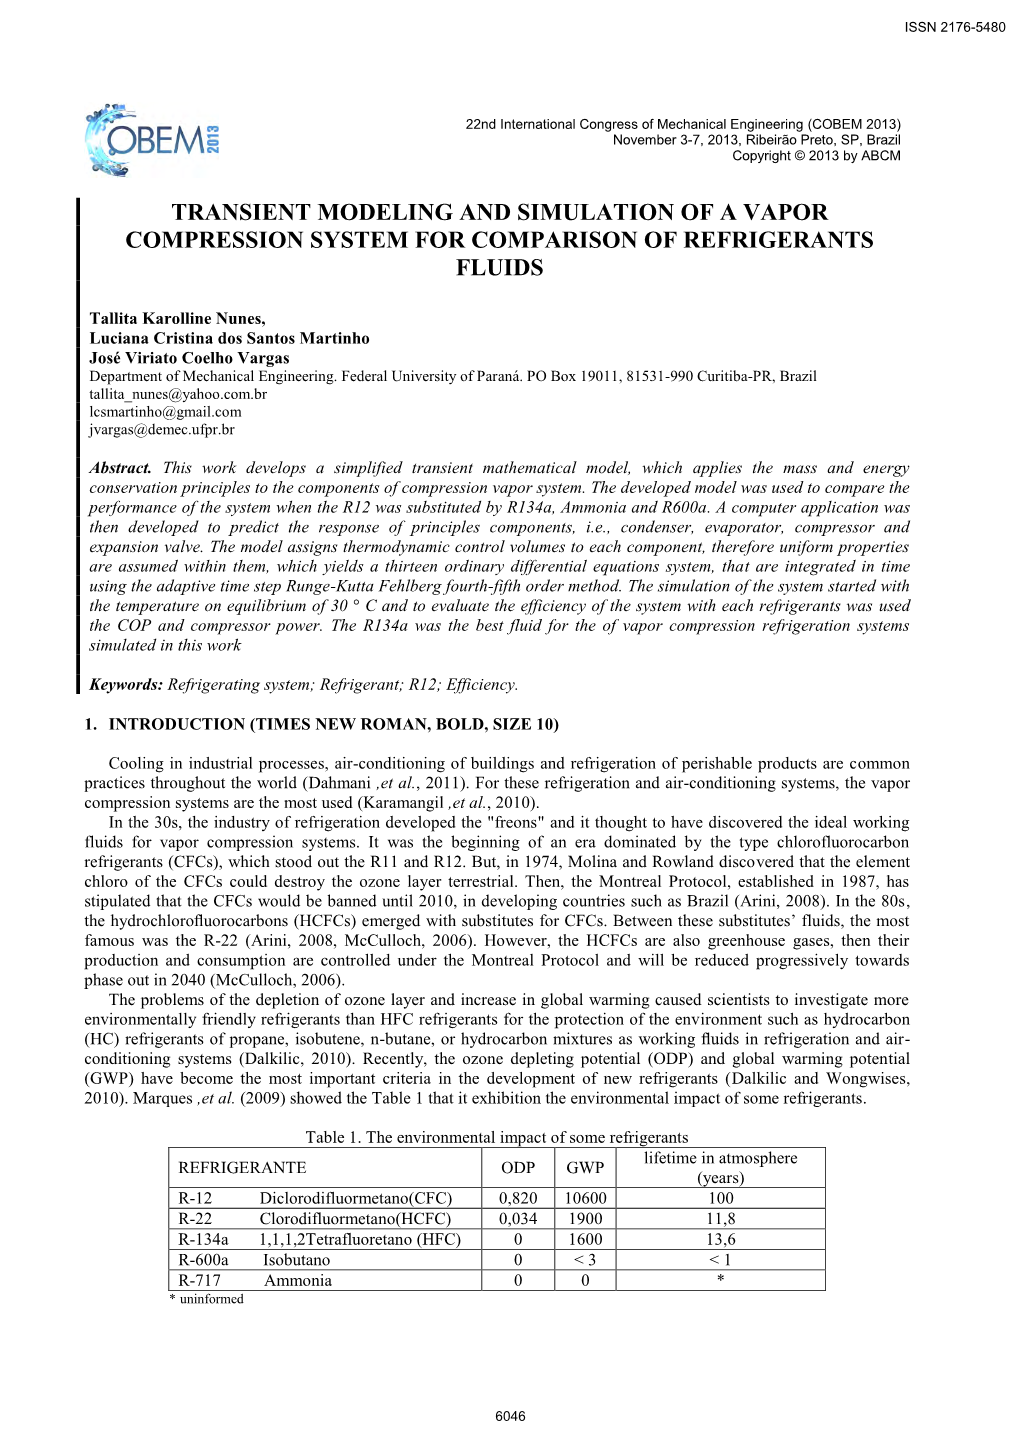 Transient Modeling and Simulation of a Vapor Compression System for Comparison of Refrigerants Fluids